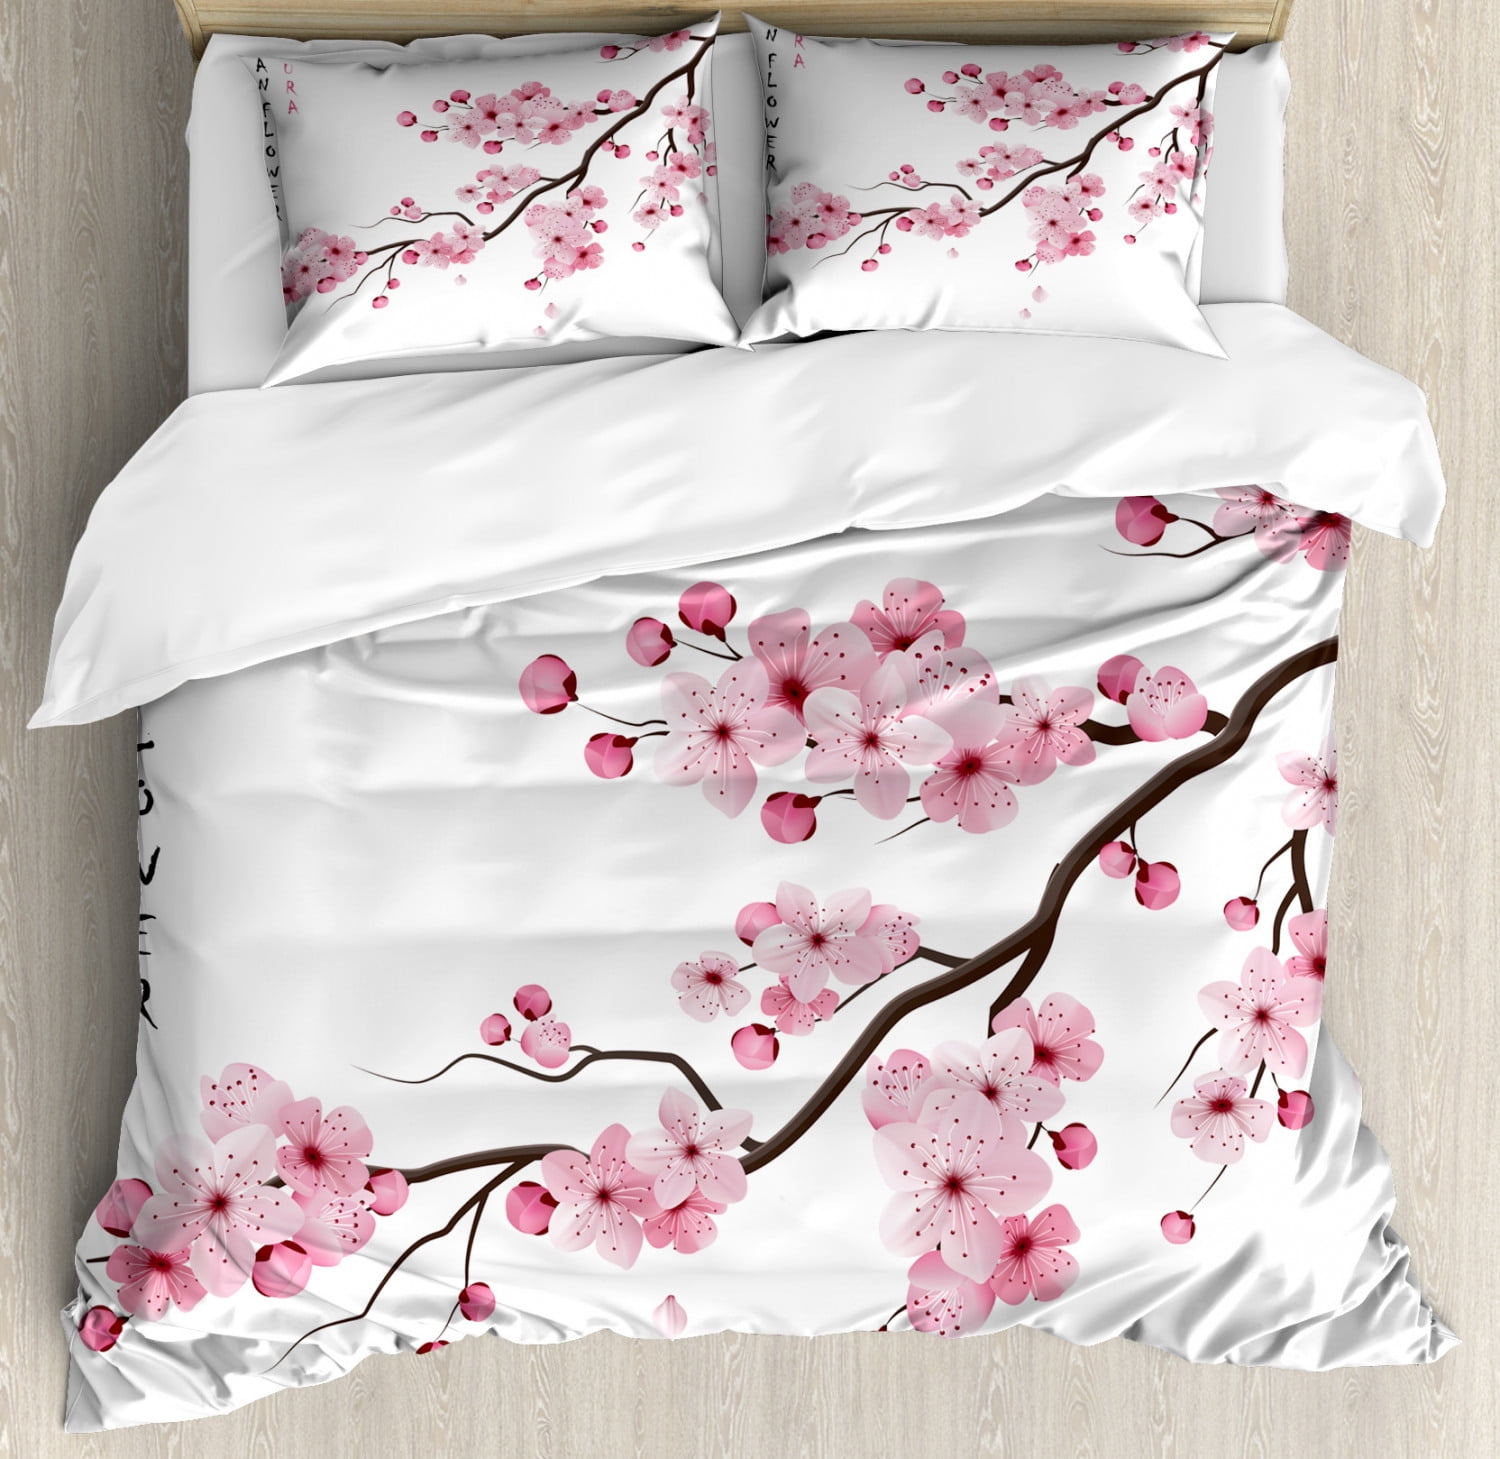 7 Piece Beige+Asian Burgundy Lotus Flower/Floral Comforter Set/Bedding Ensemble 